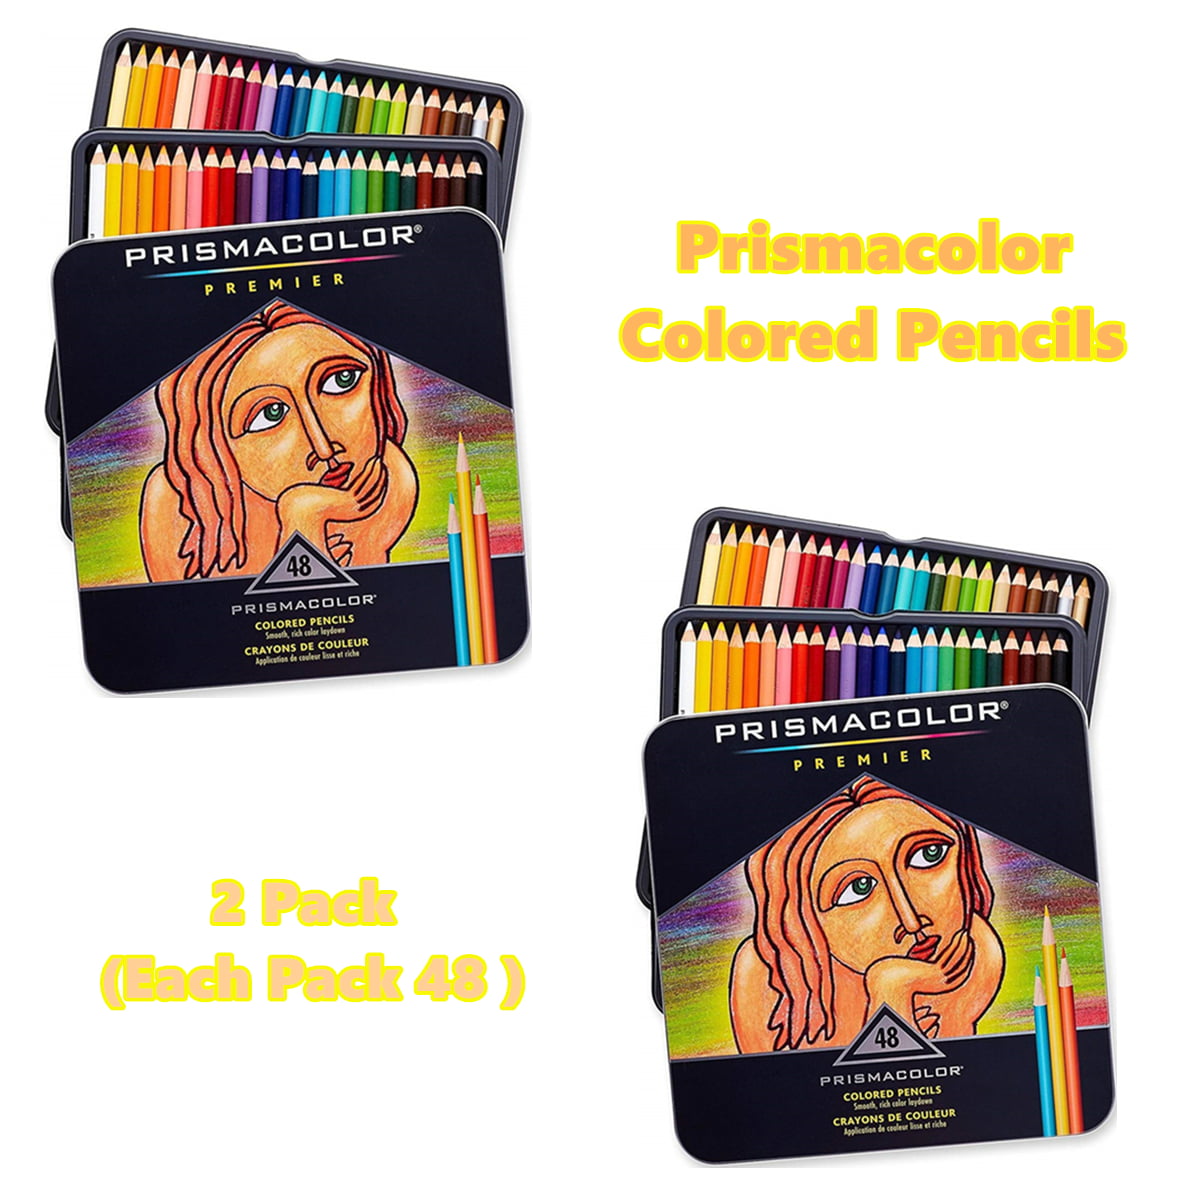 48 prismacolors brand new 2 sets